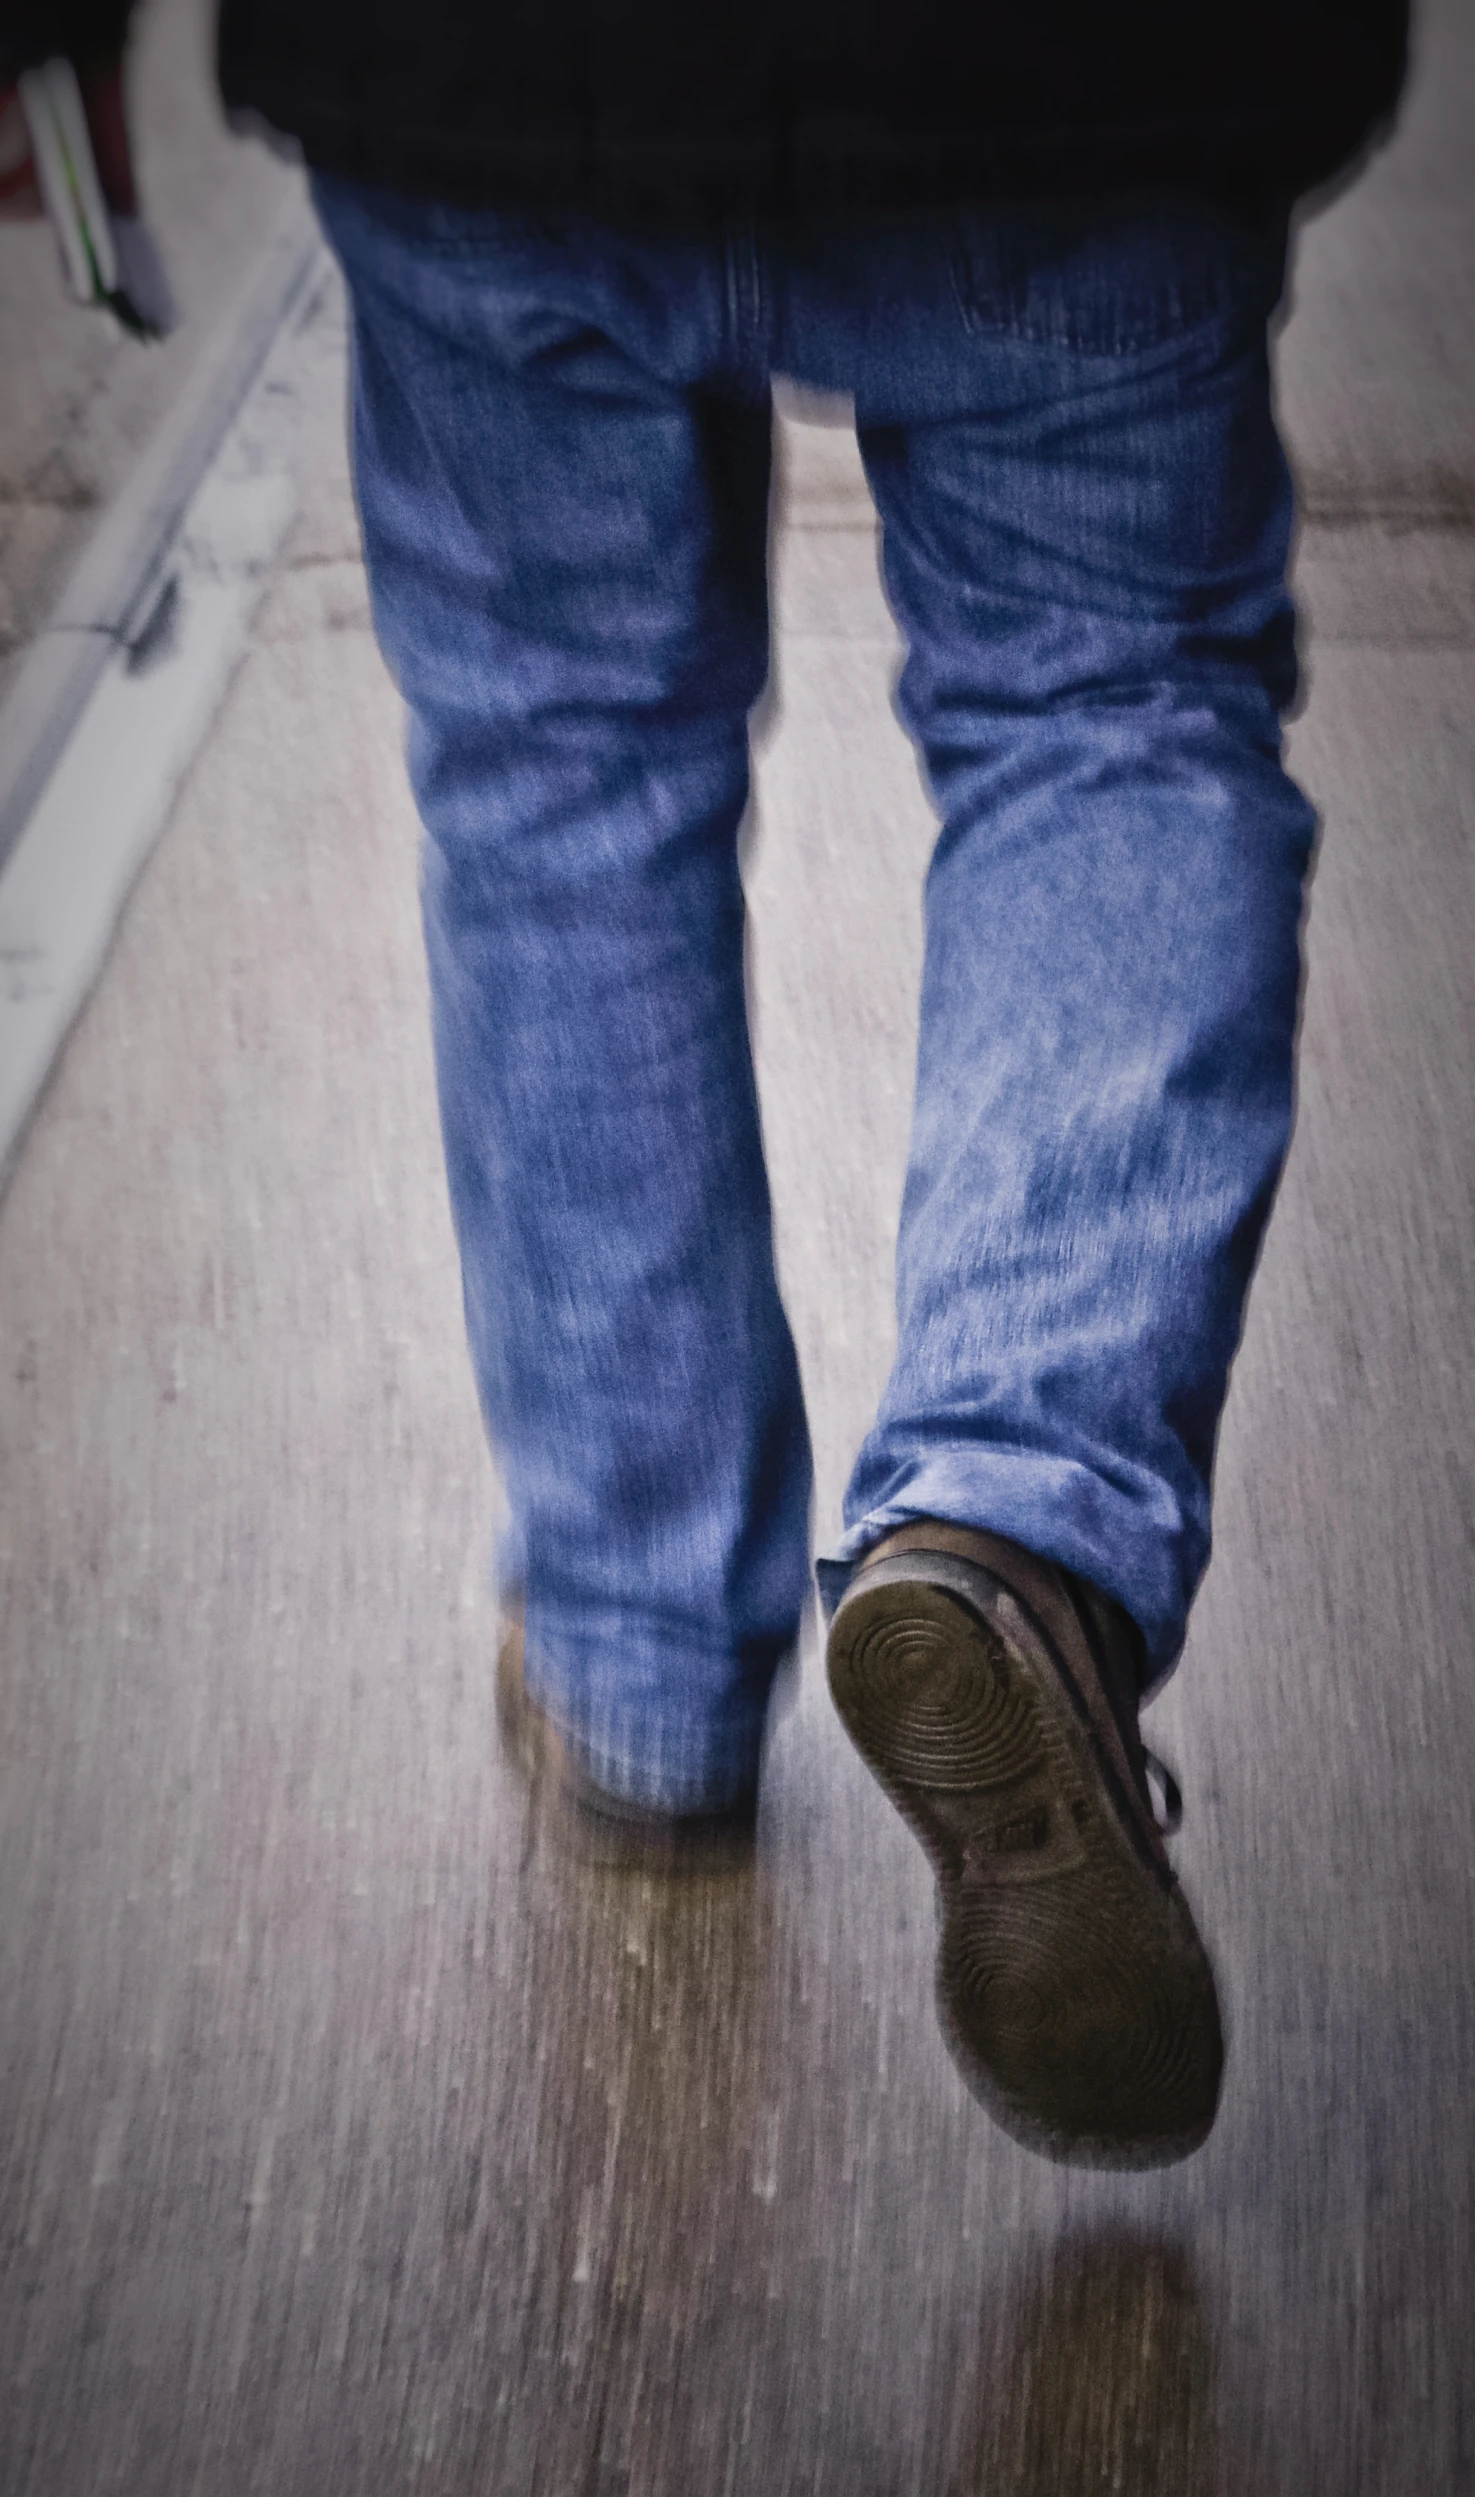 a person is walking down a walkway wearing dark shoes